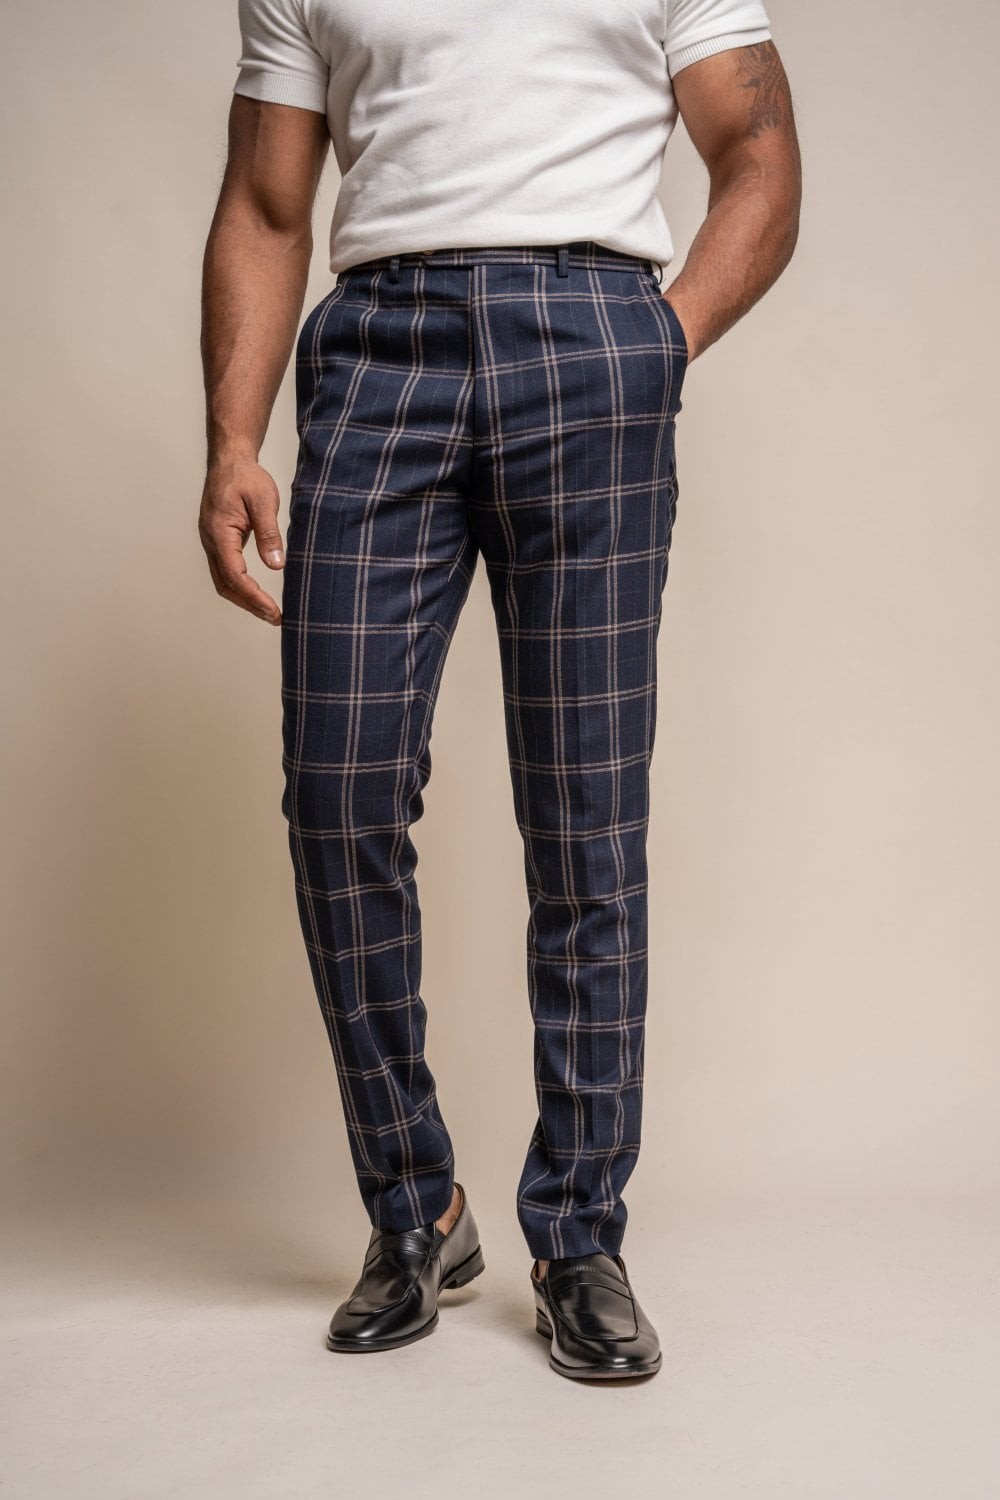 Men Waffle Pattern Trousers Formal Casual Slim Pencil Pants Elastic Waist  Shorts | eBay